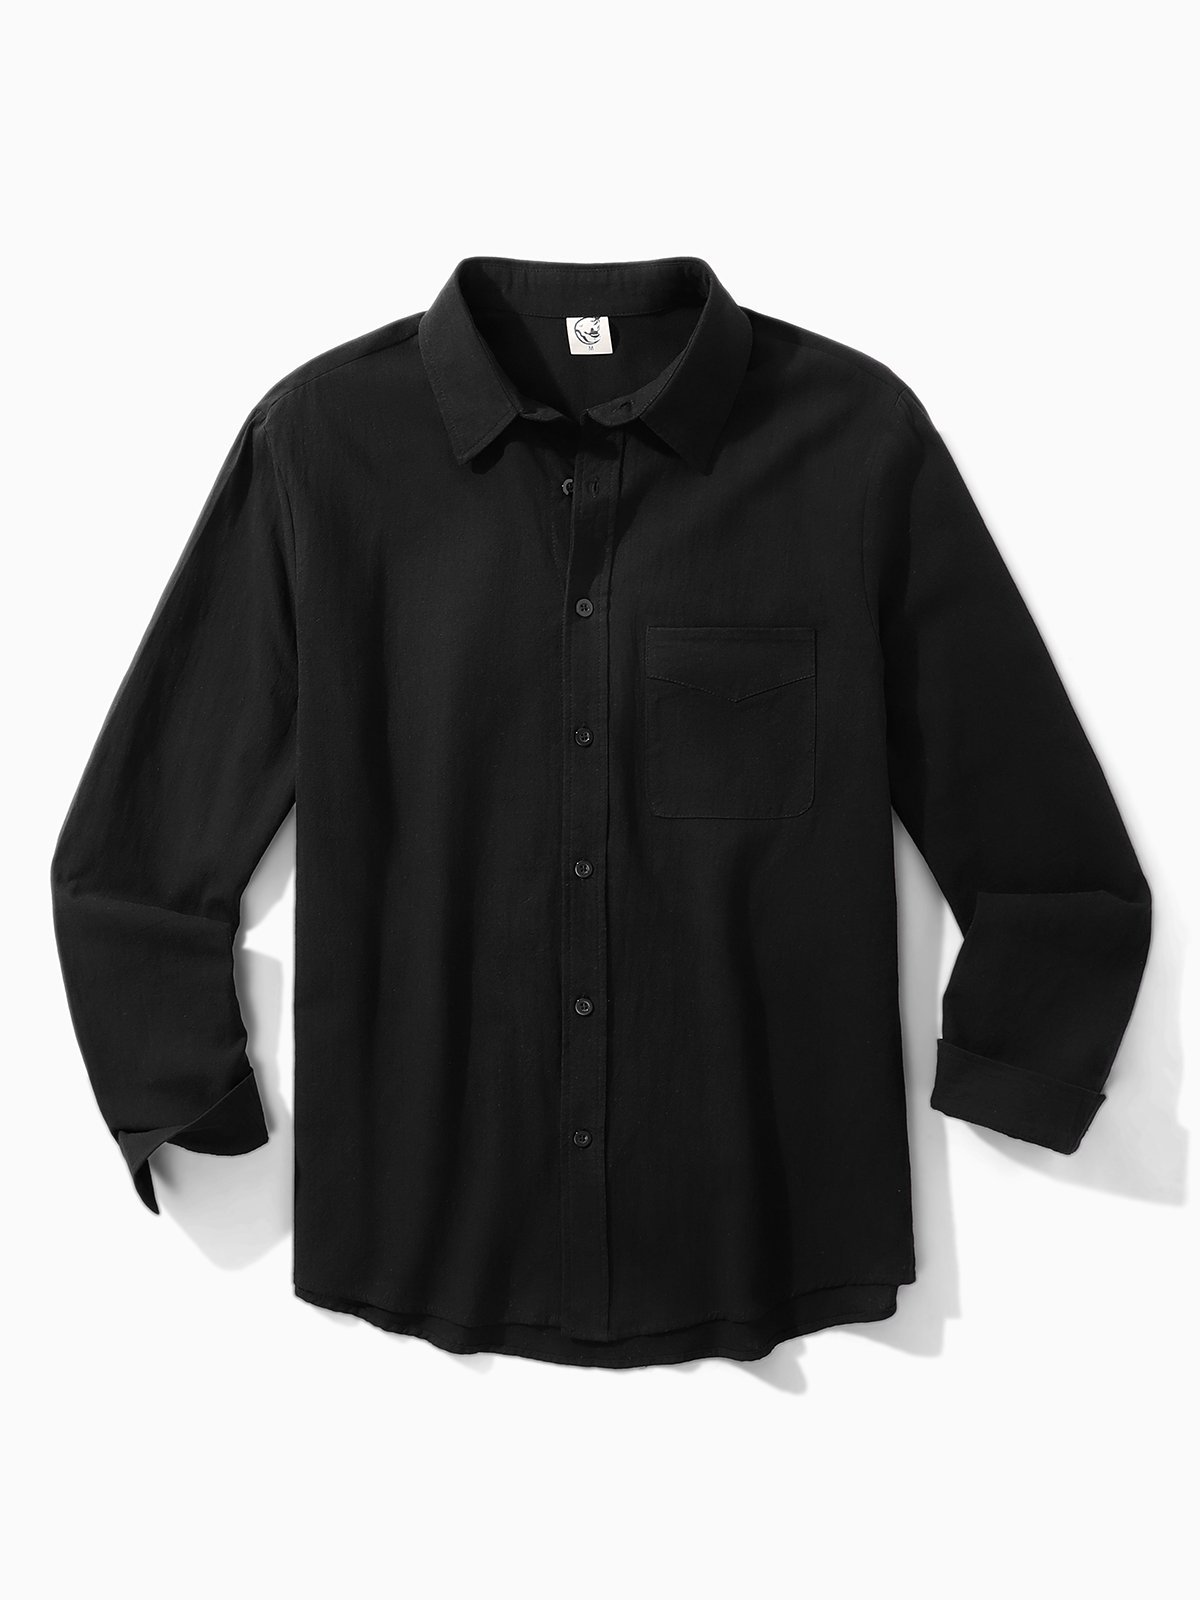 Hardaddy Big Size Cotton Chest Pocket Long Sleeve Shirt